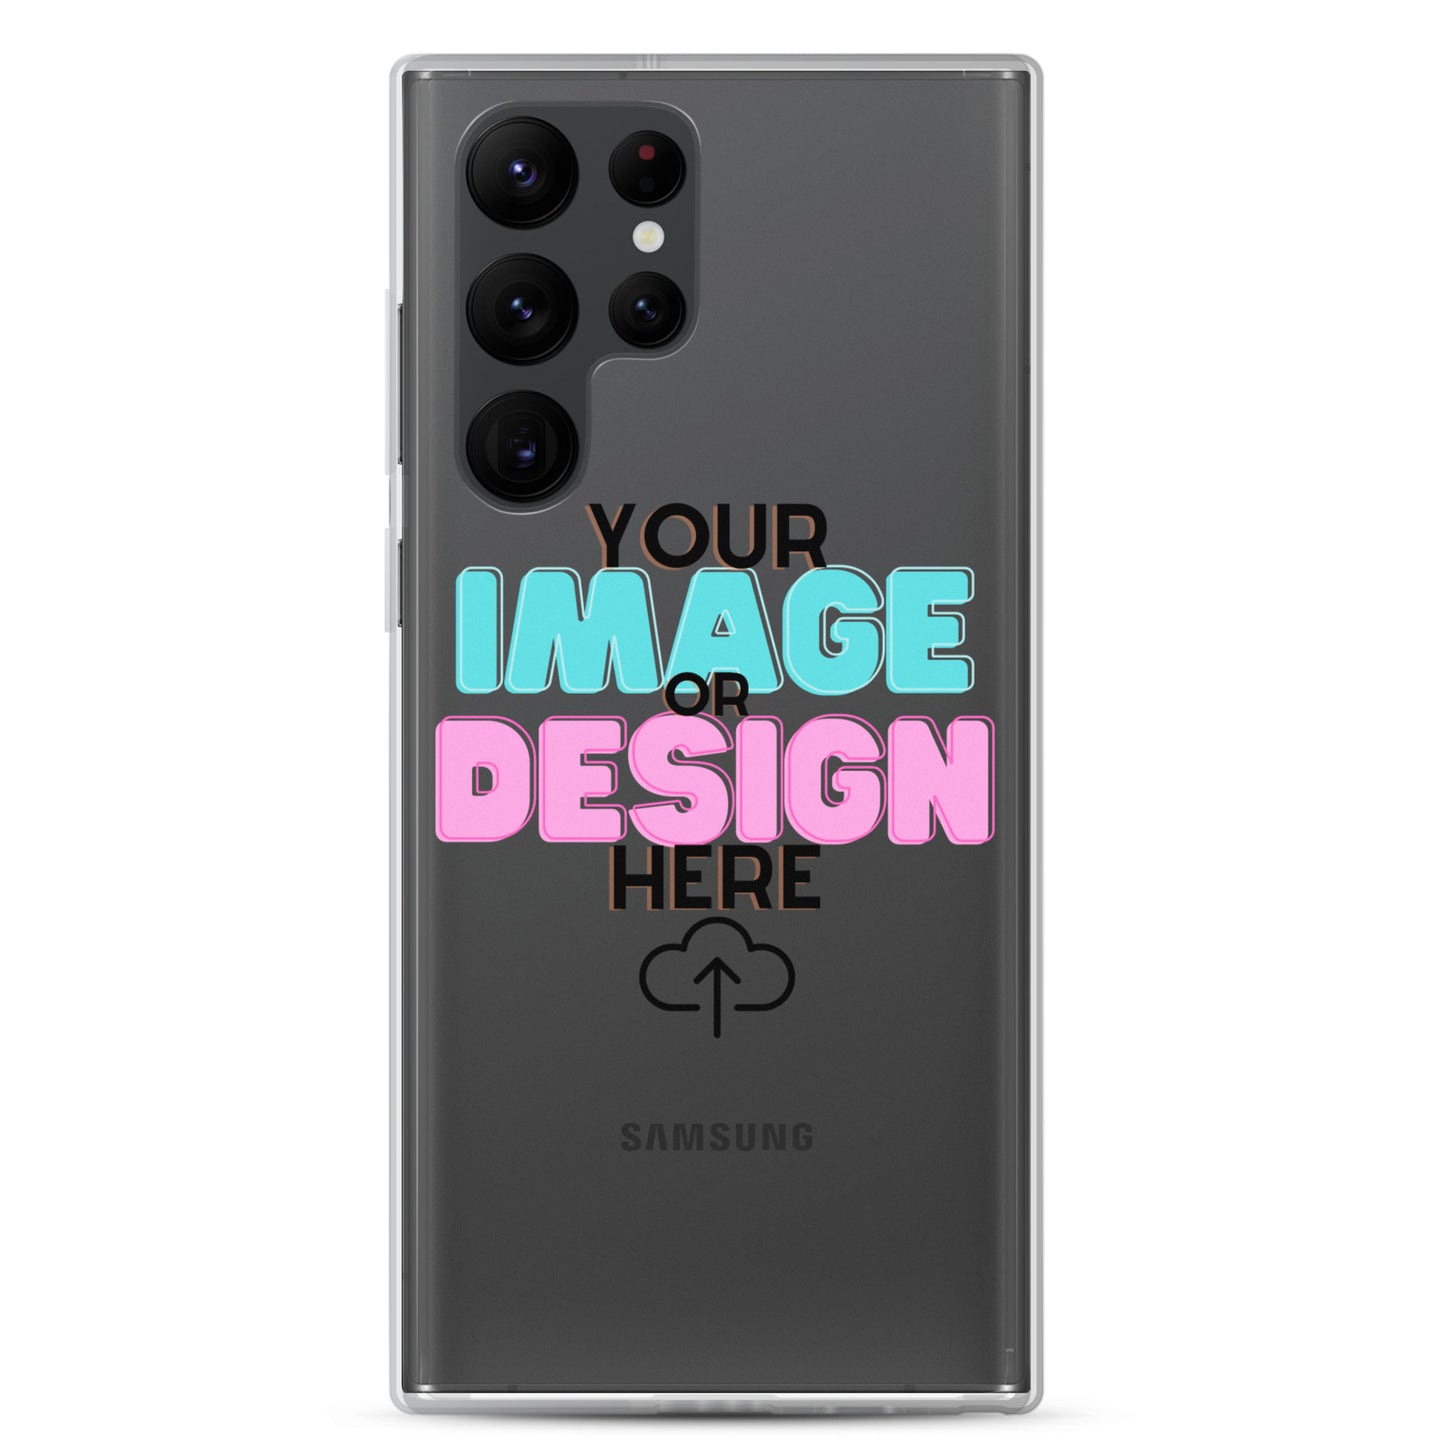 Customizable Samsung case